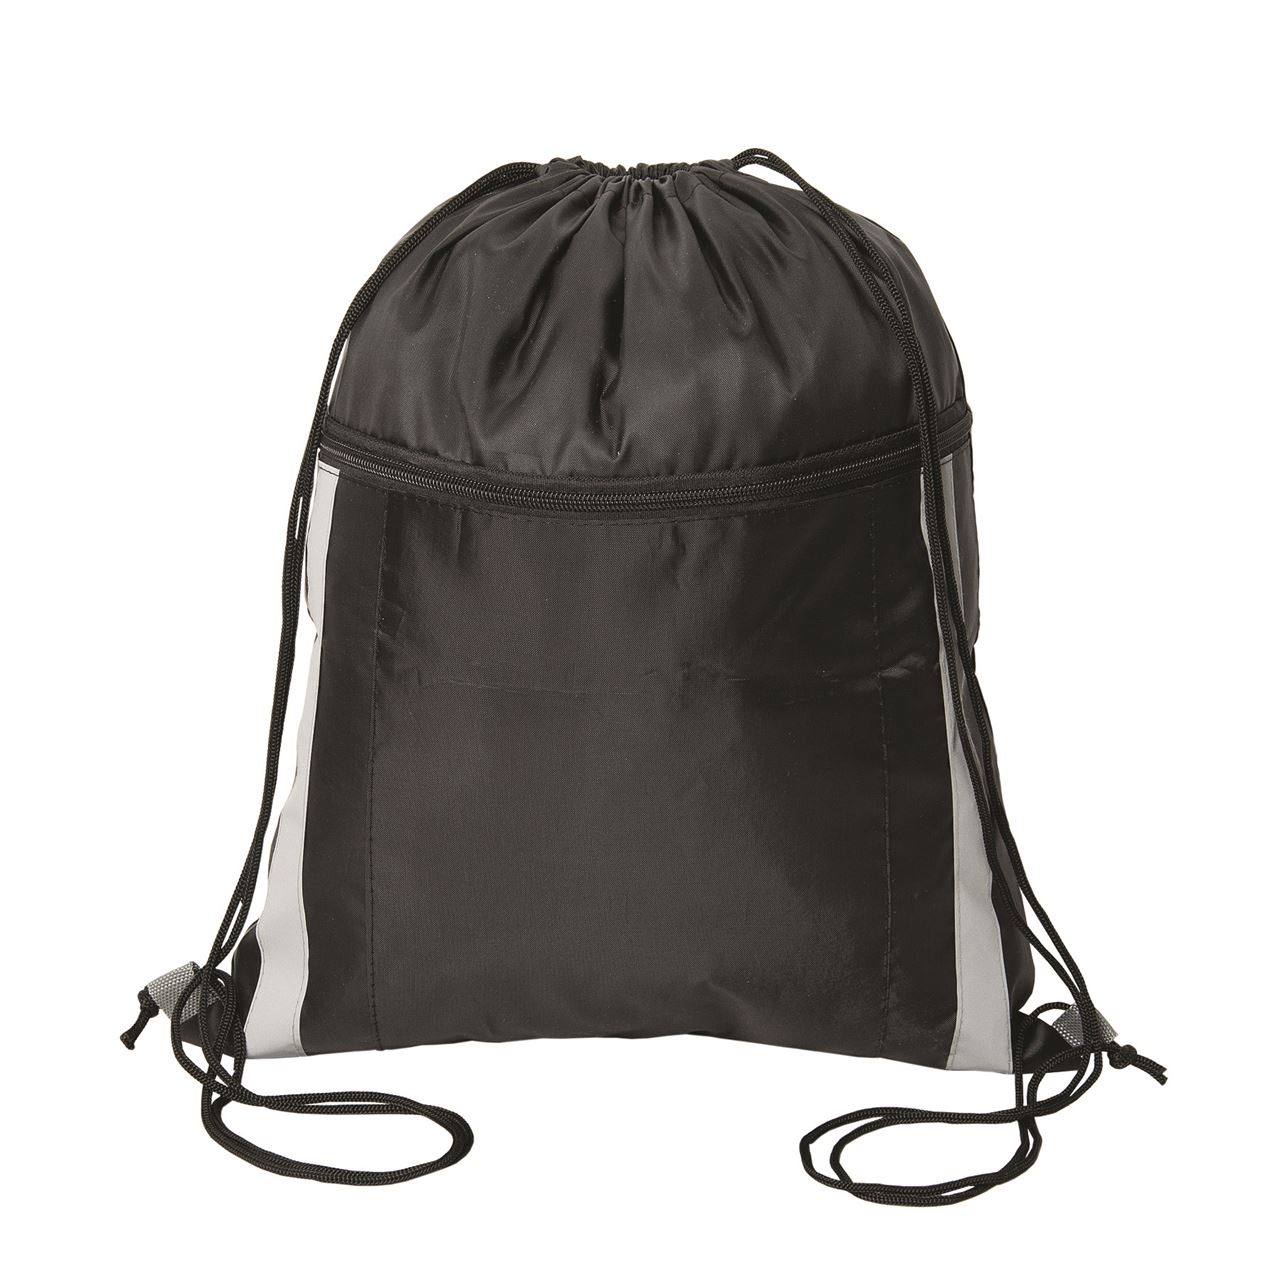 KEVE JAM Shoulders sackpack Cinch Shopping Cool Drawstring Bags 